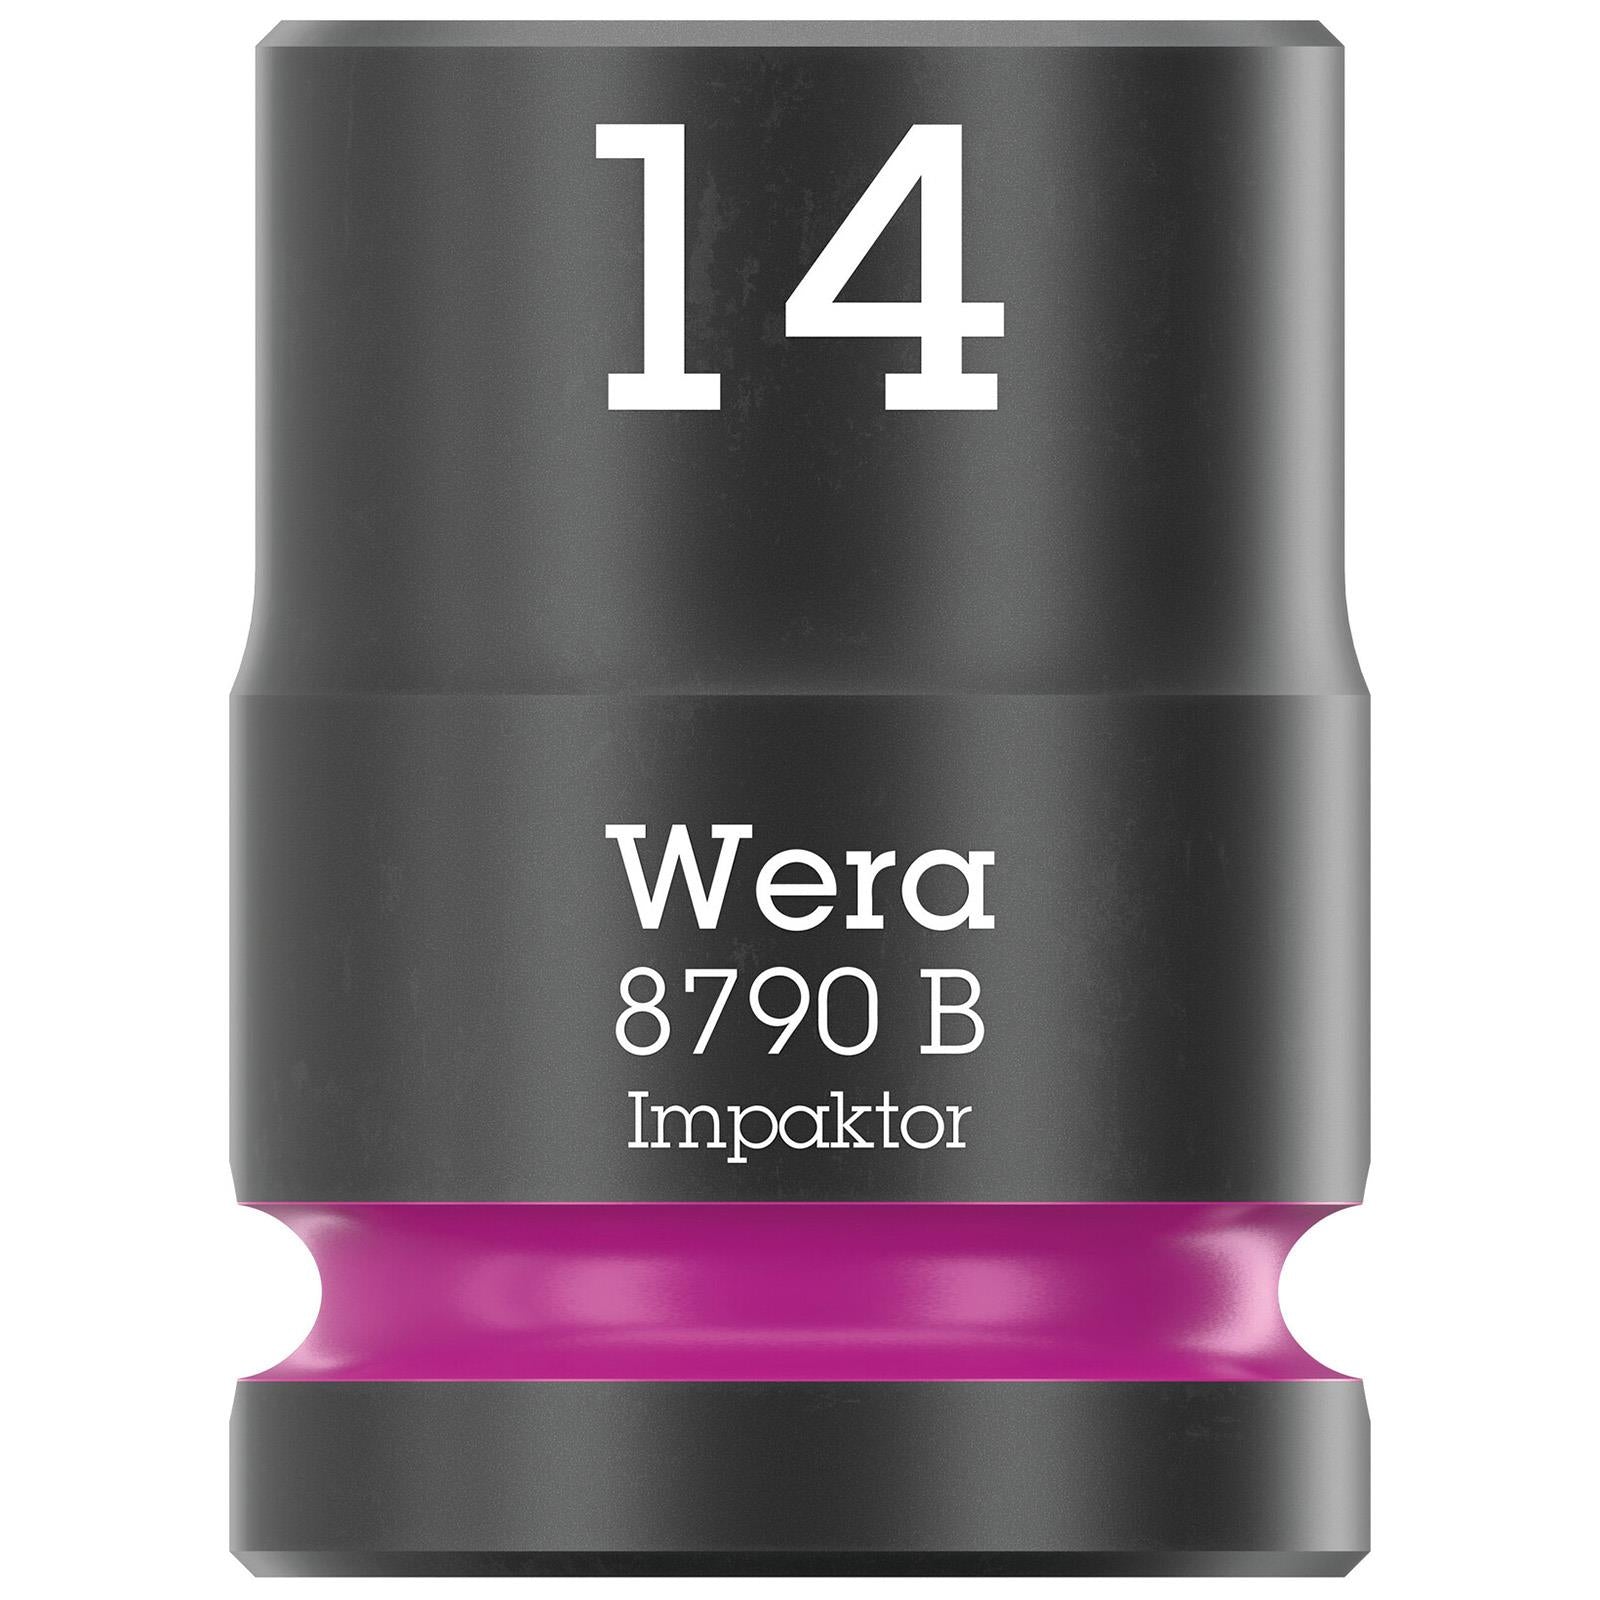 Wera Impact Socket 3/8" Drive 8790 B Impaktor Choose Size Metric 8-24mm or Imperial 1/4"-1